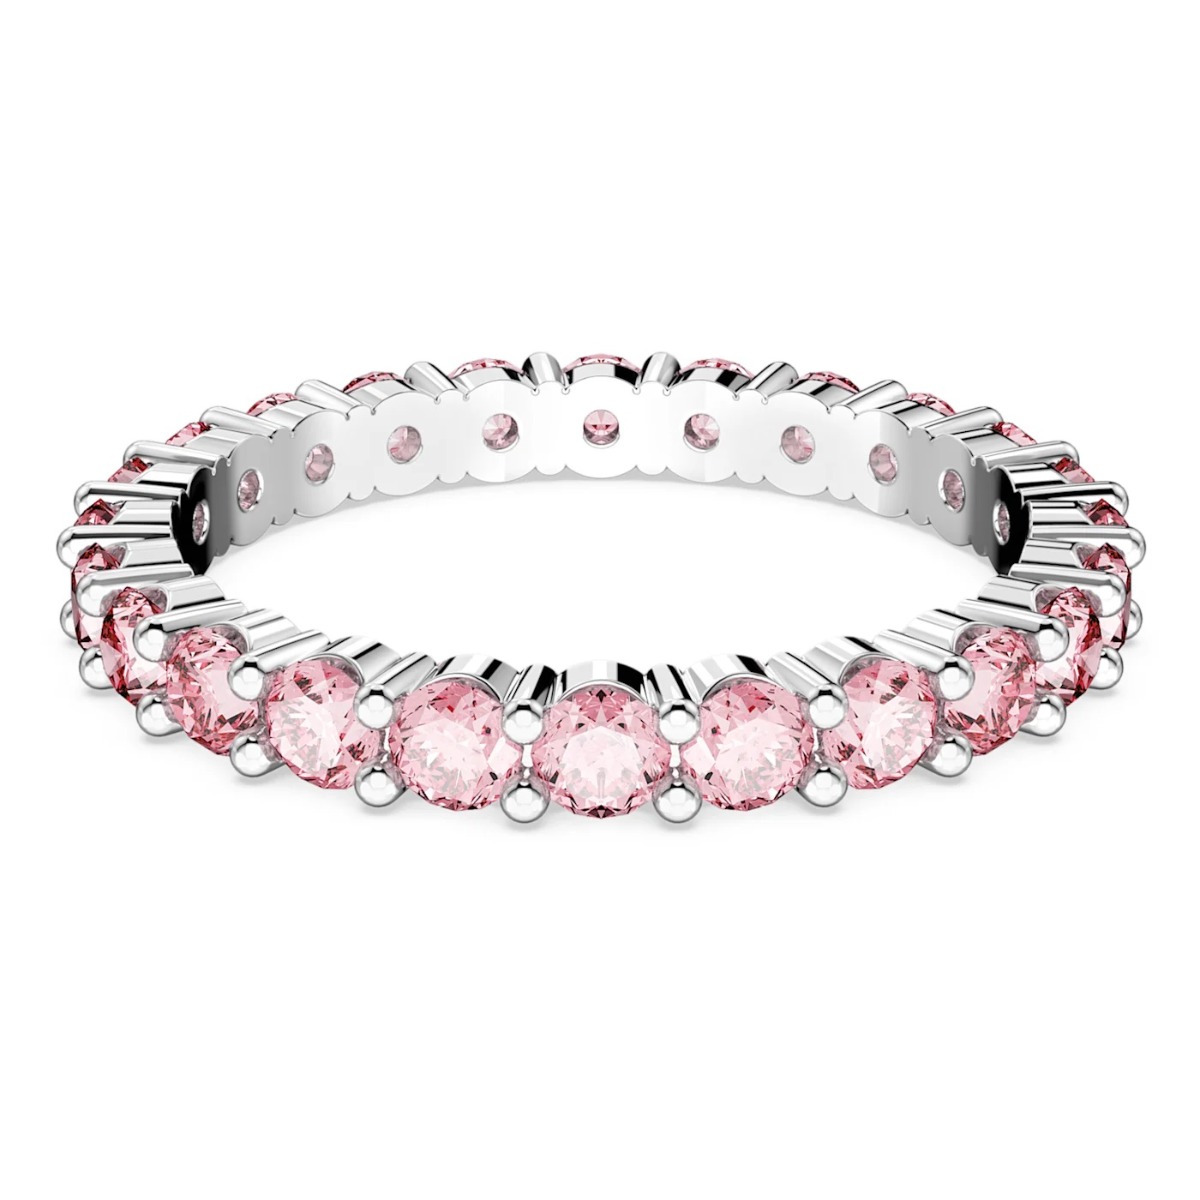 Swarovski Matrix Round Cut Ring - Pink with Rhodium Plating 5658853, 5658856, 5658855